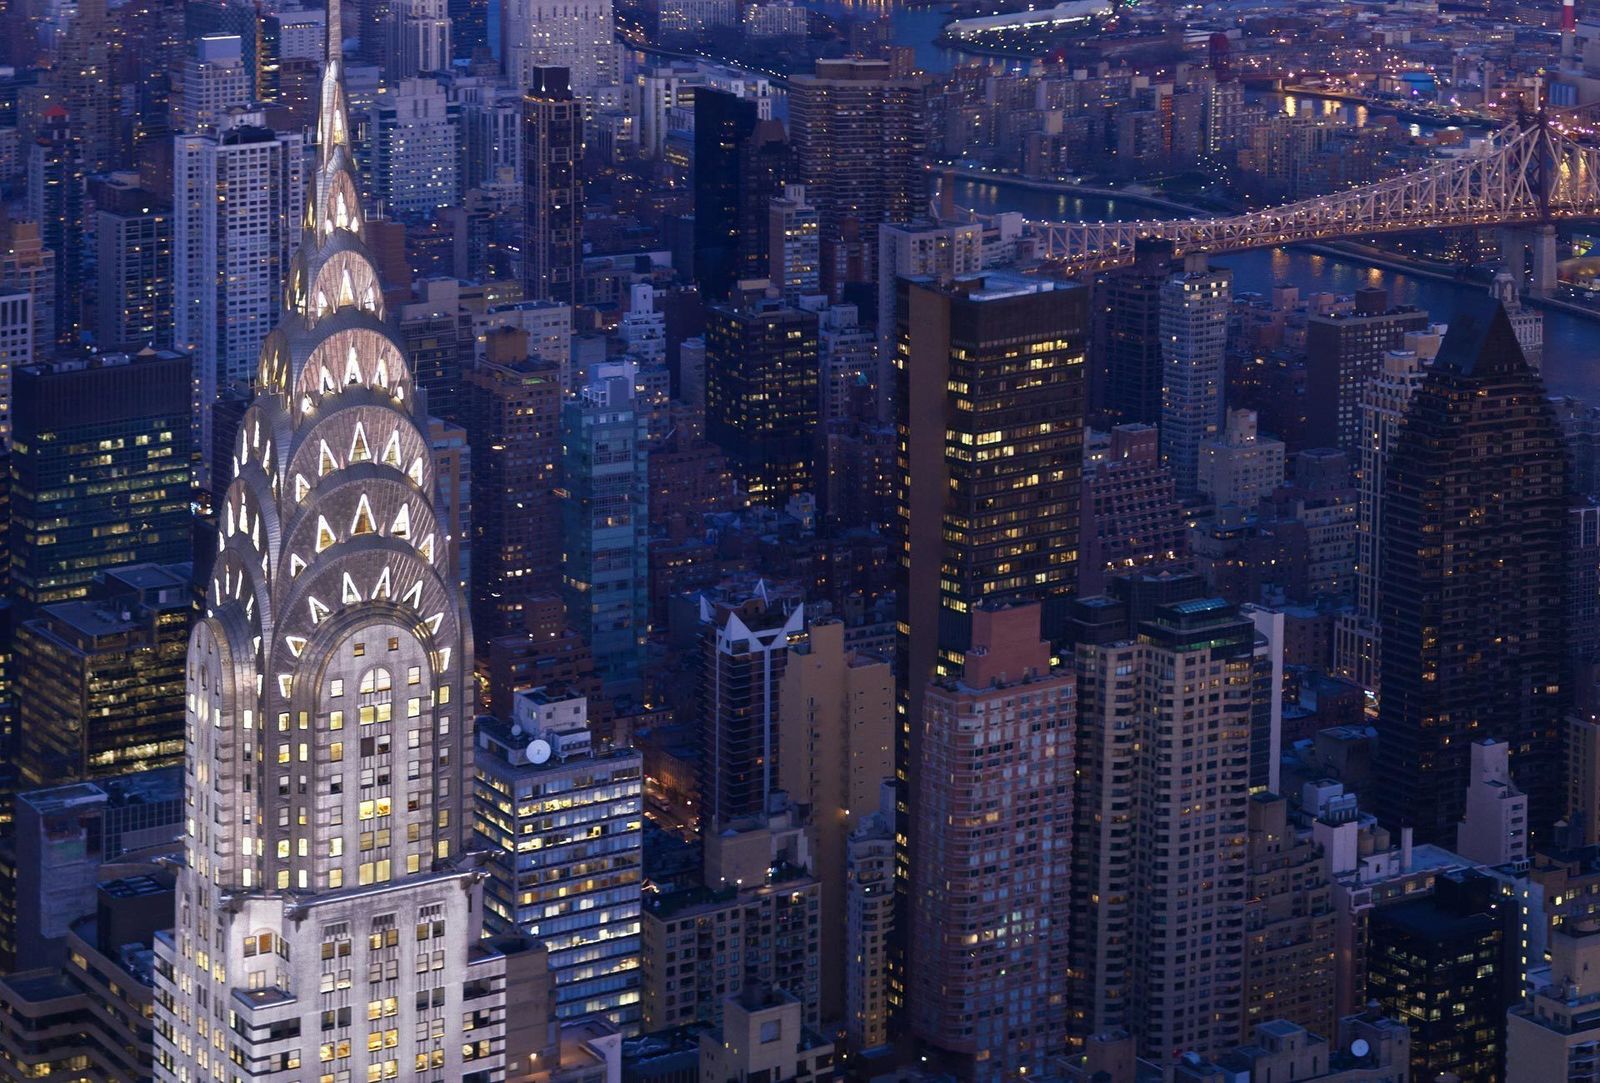 The Chrysler Building, New York. William van Alen, 1930 2015 Tishman Speyer